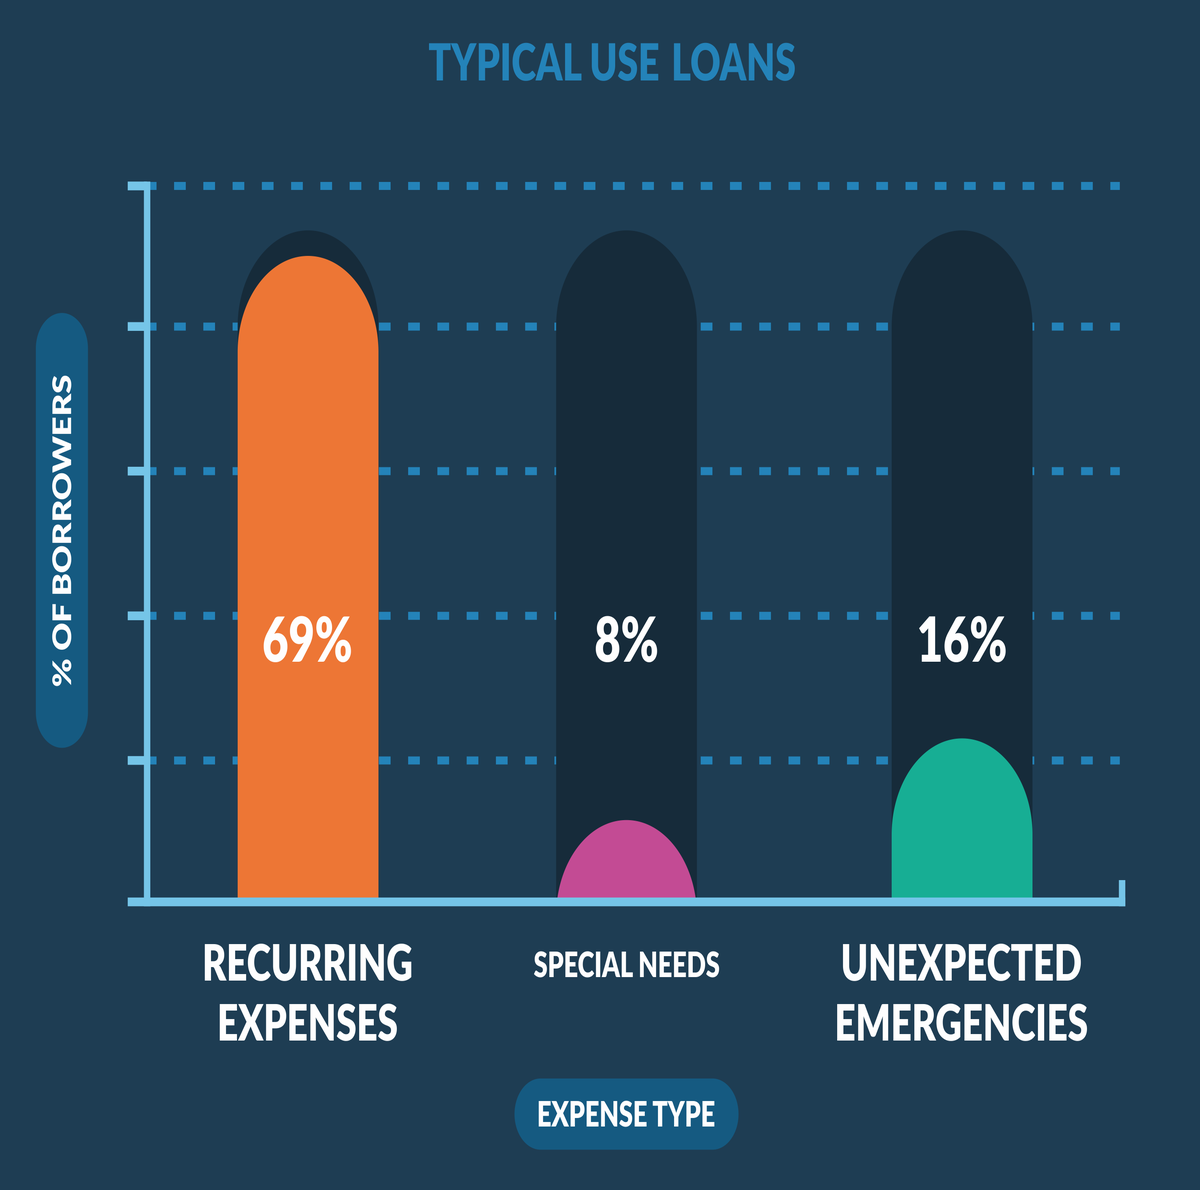 Bad Credit Personal Loans Ontario